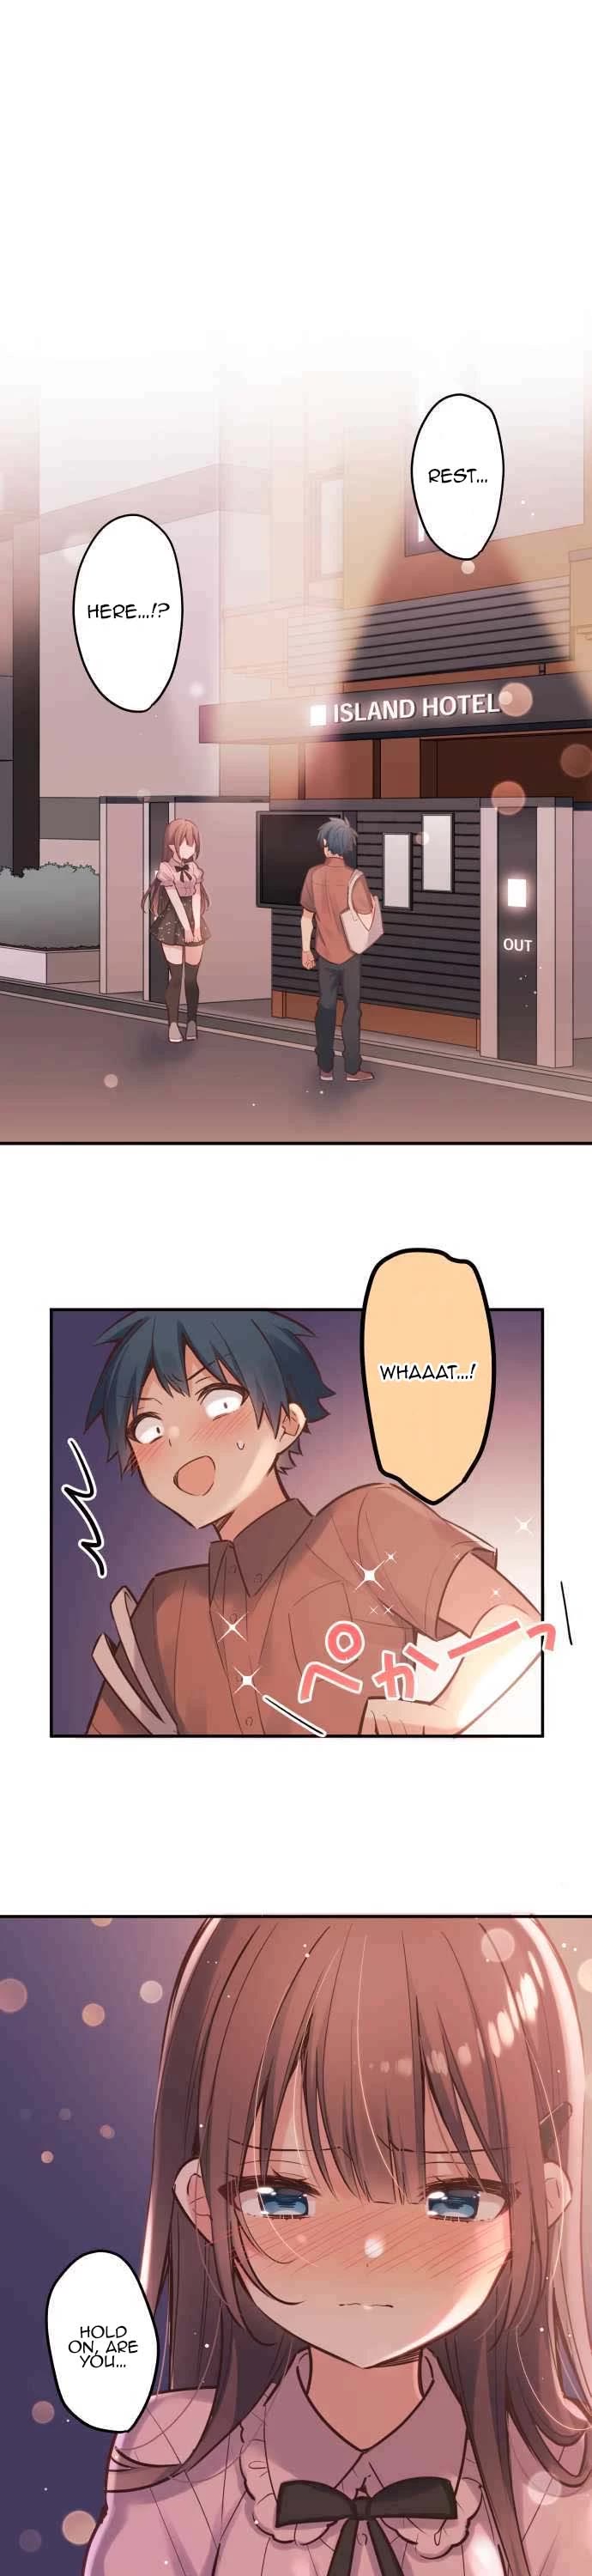 Waka-Chan Is Flirty Again - Page 2